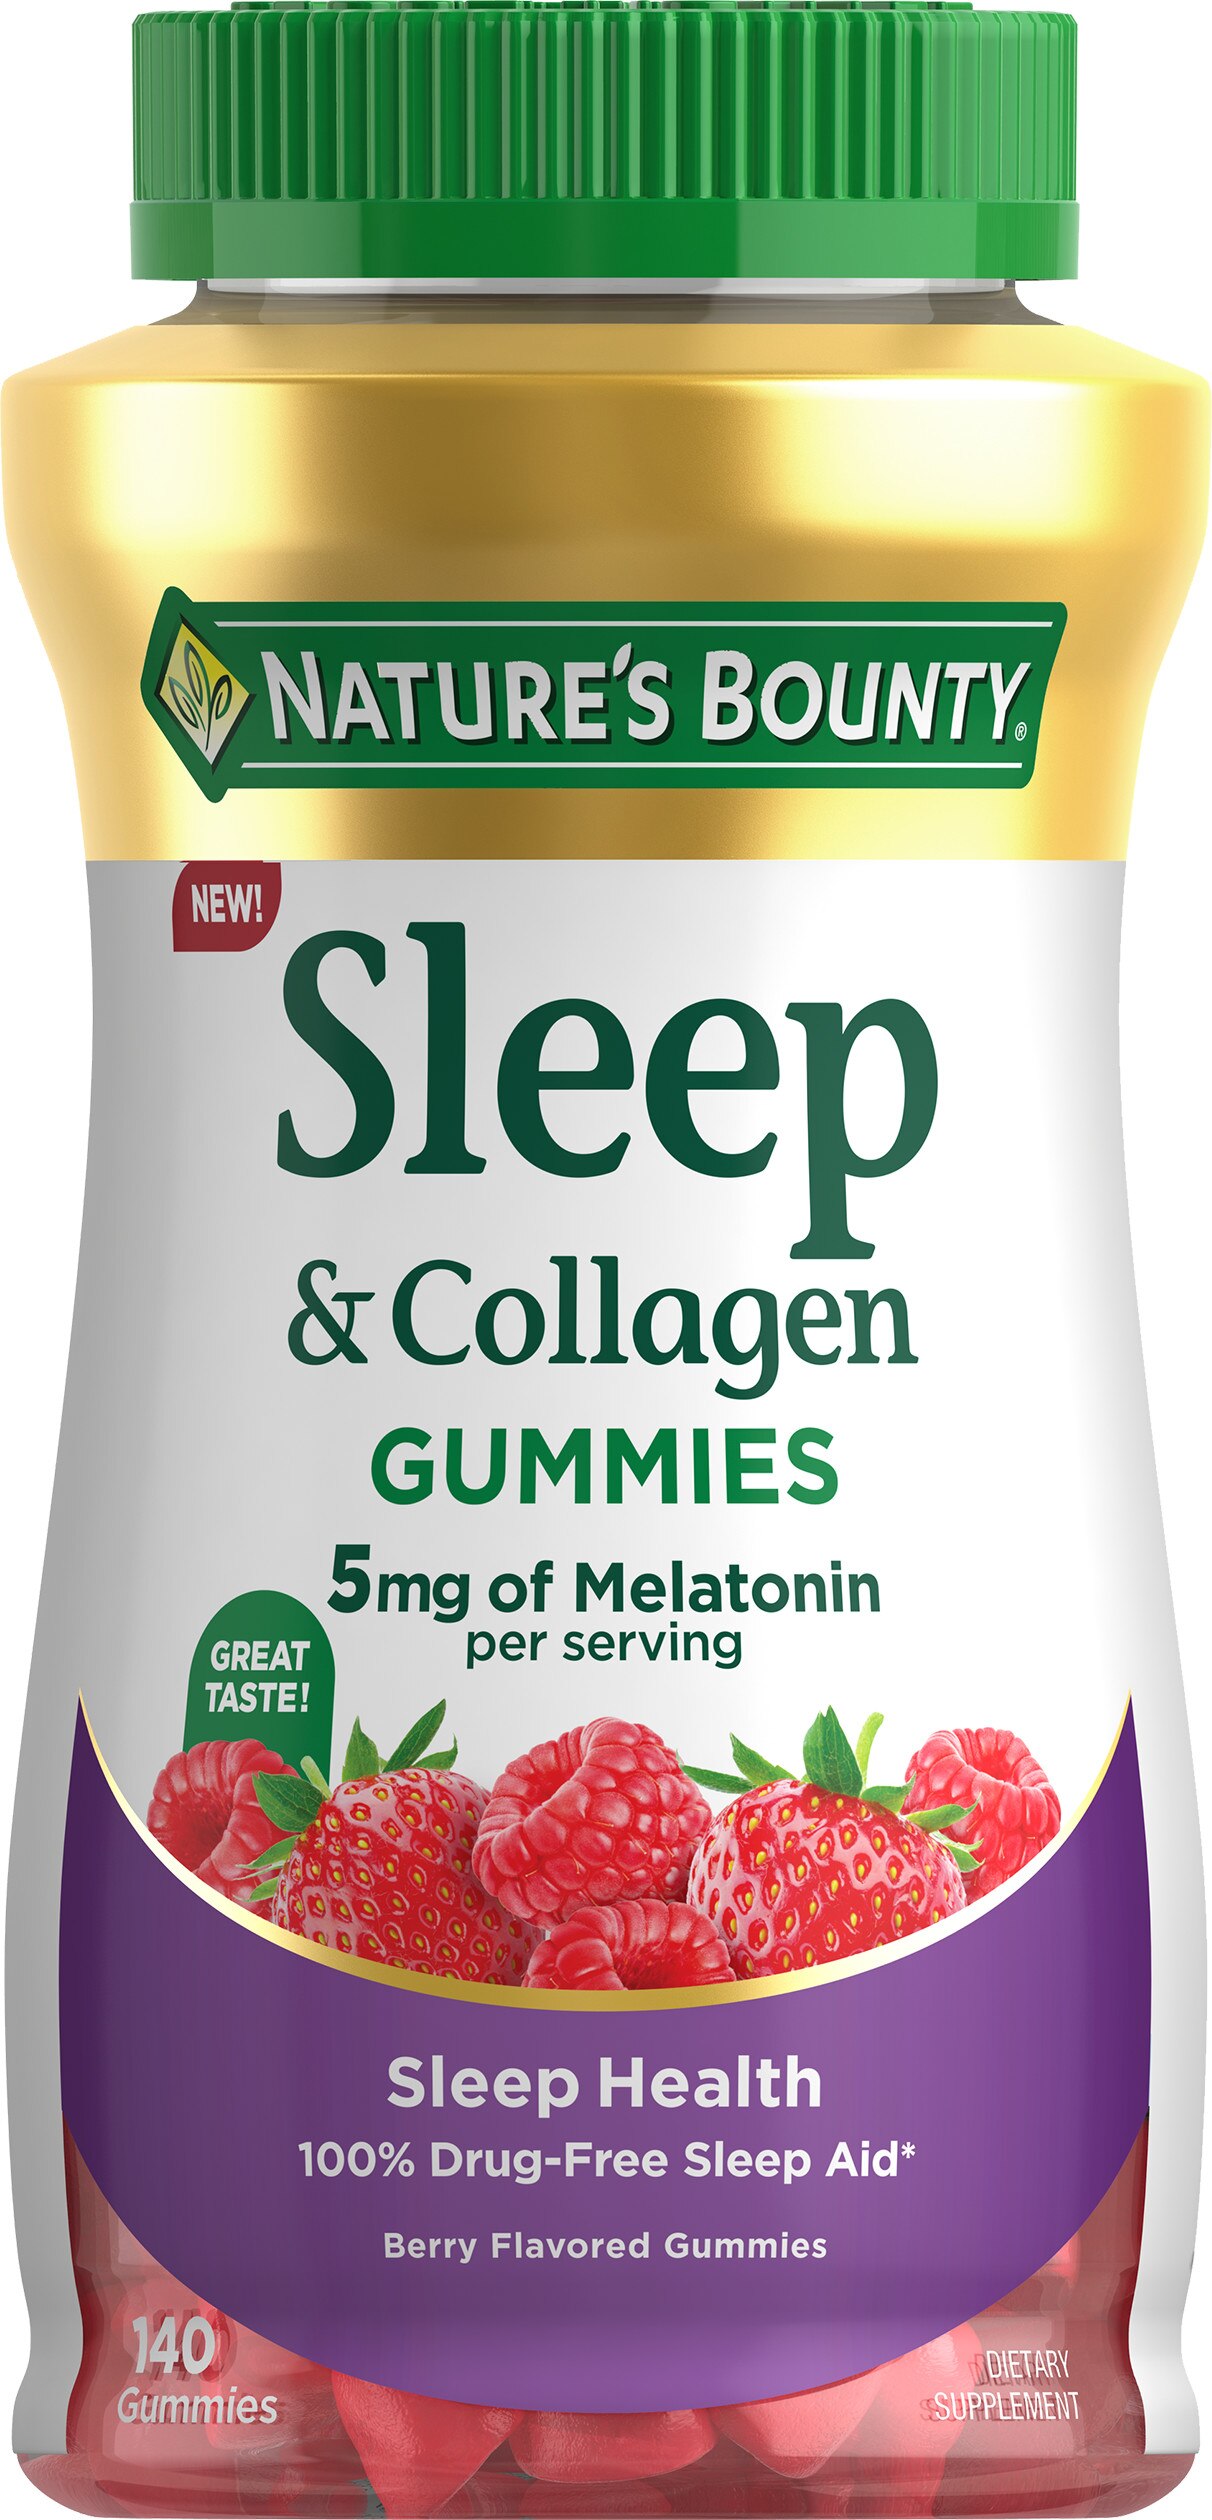 Nature's Bounty Sleep + Collagen, 5mg Melatonin, Berry Flavor, 140 Gummiess